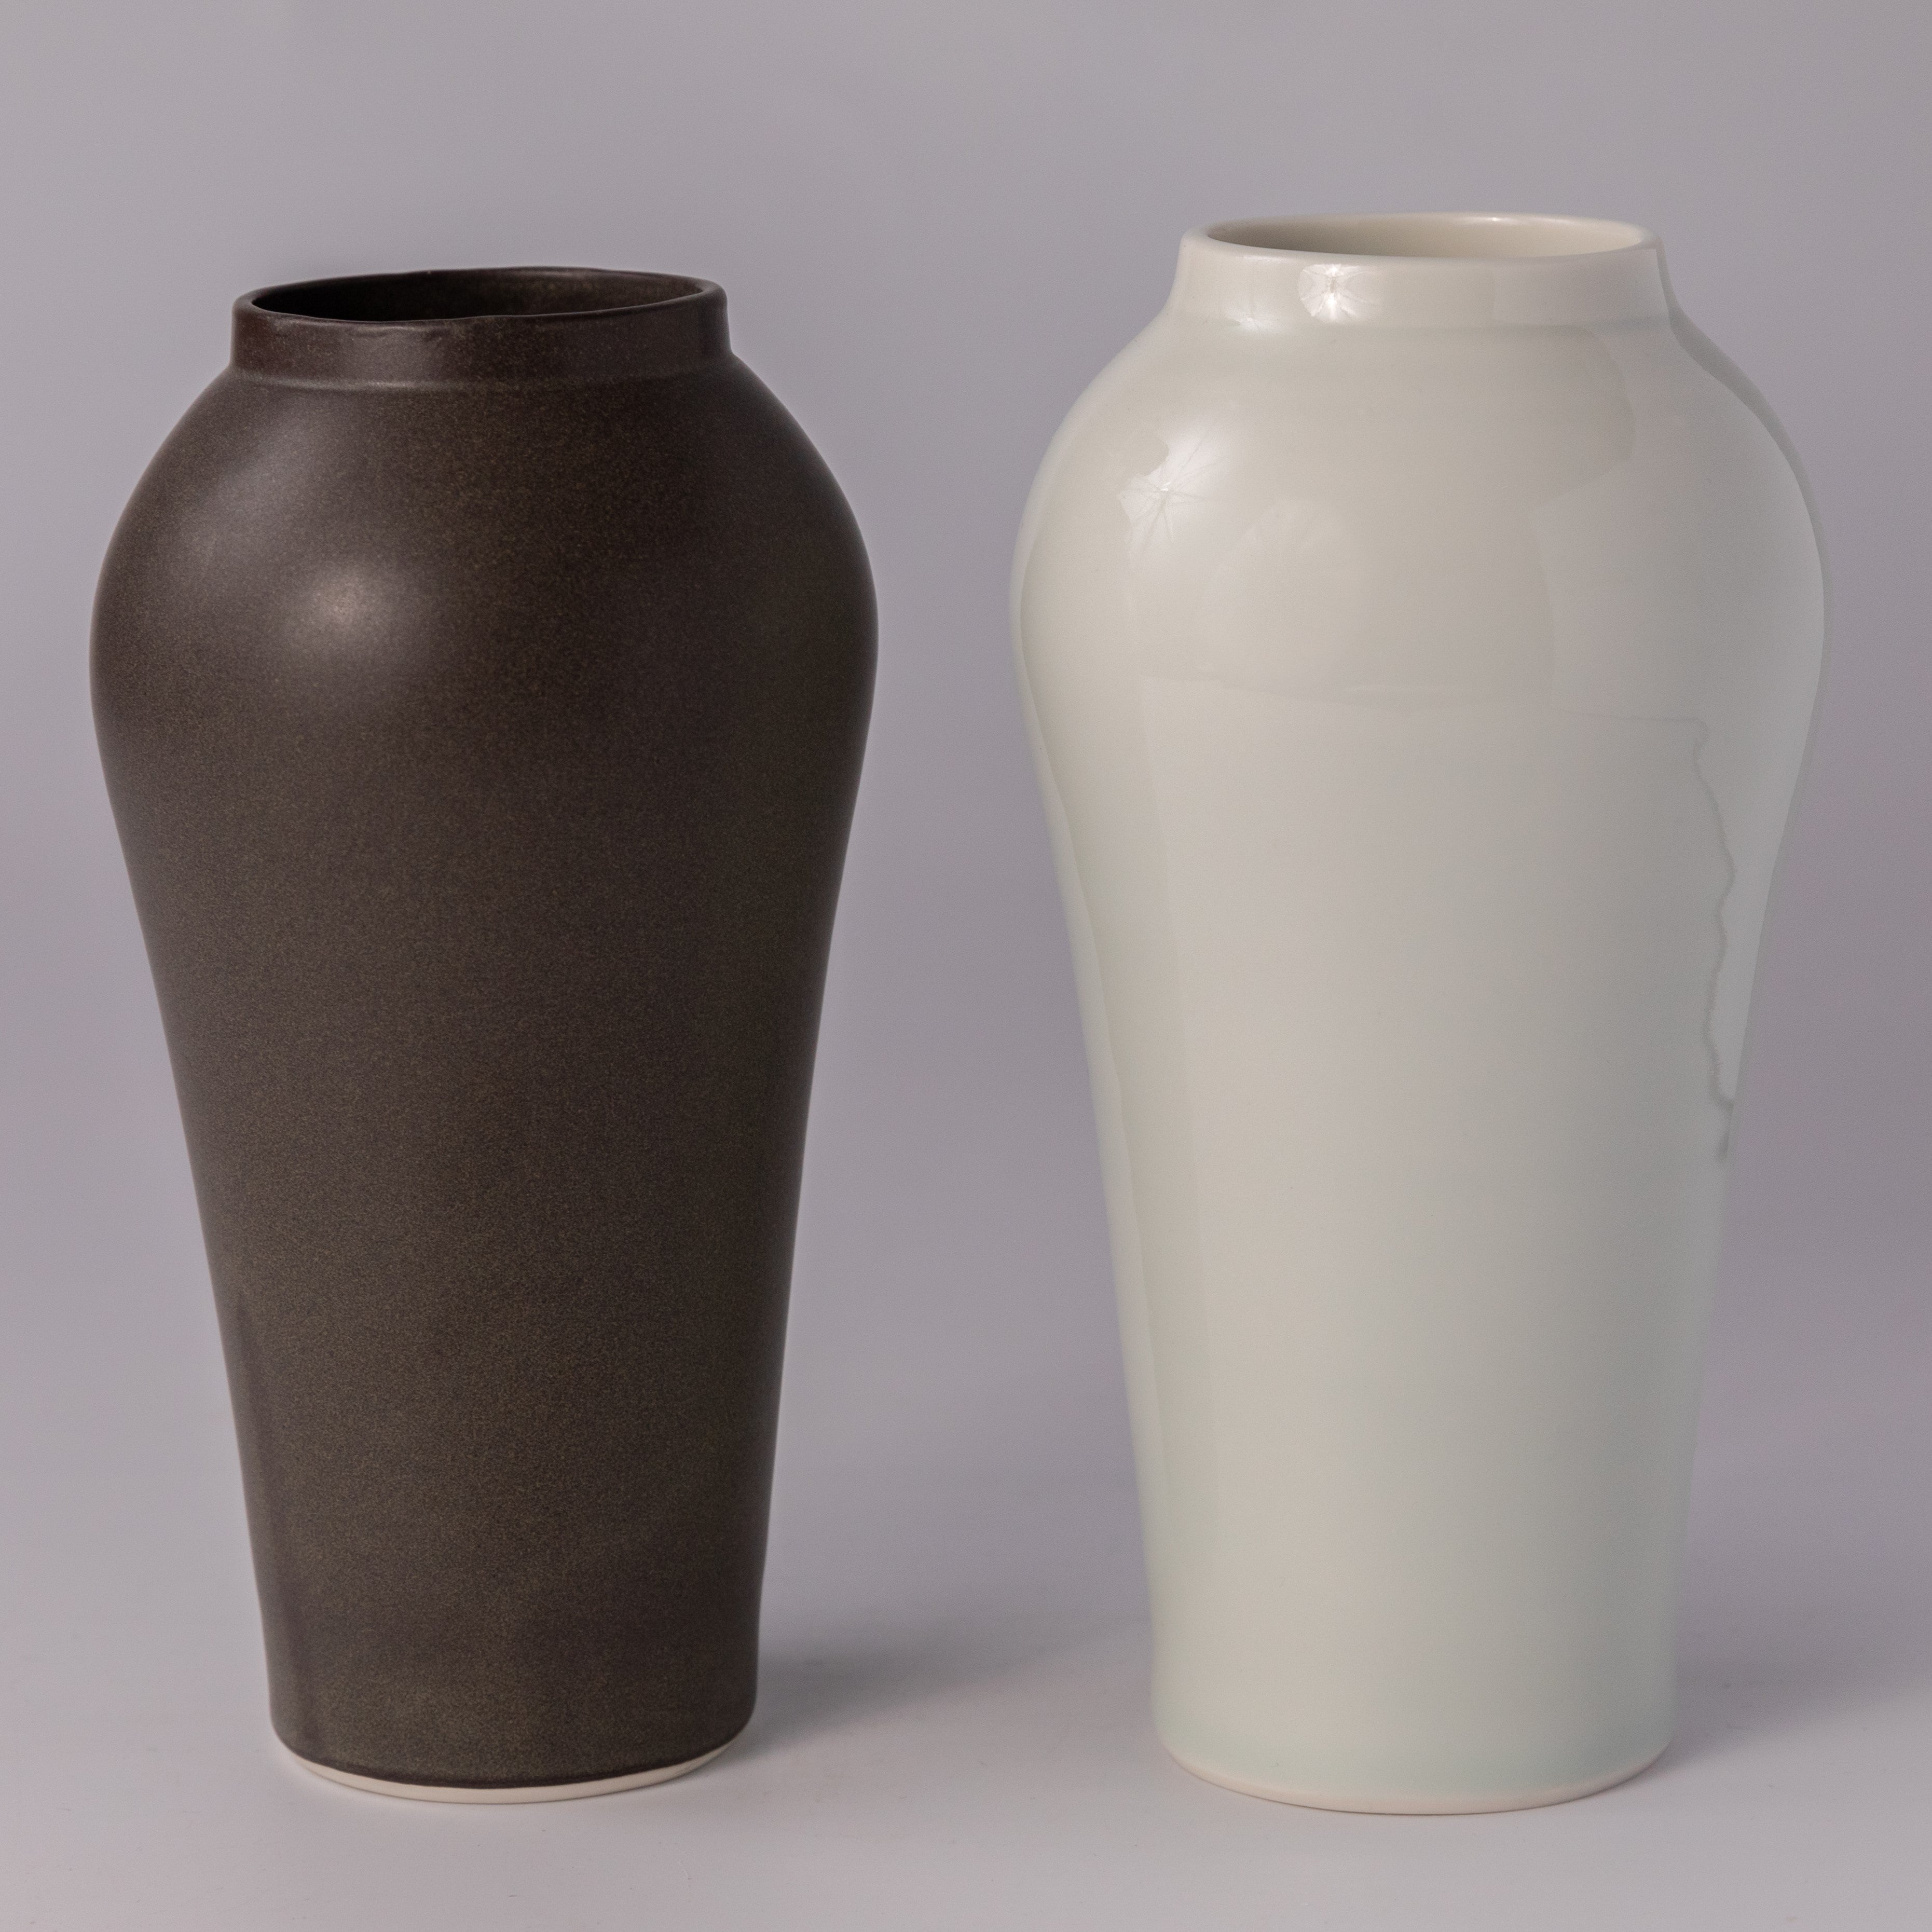 Robyn Hardyman for Keeeps - Tall Vase in Various glazes